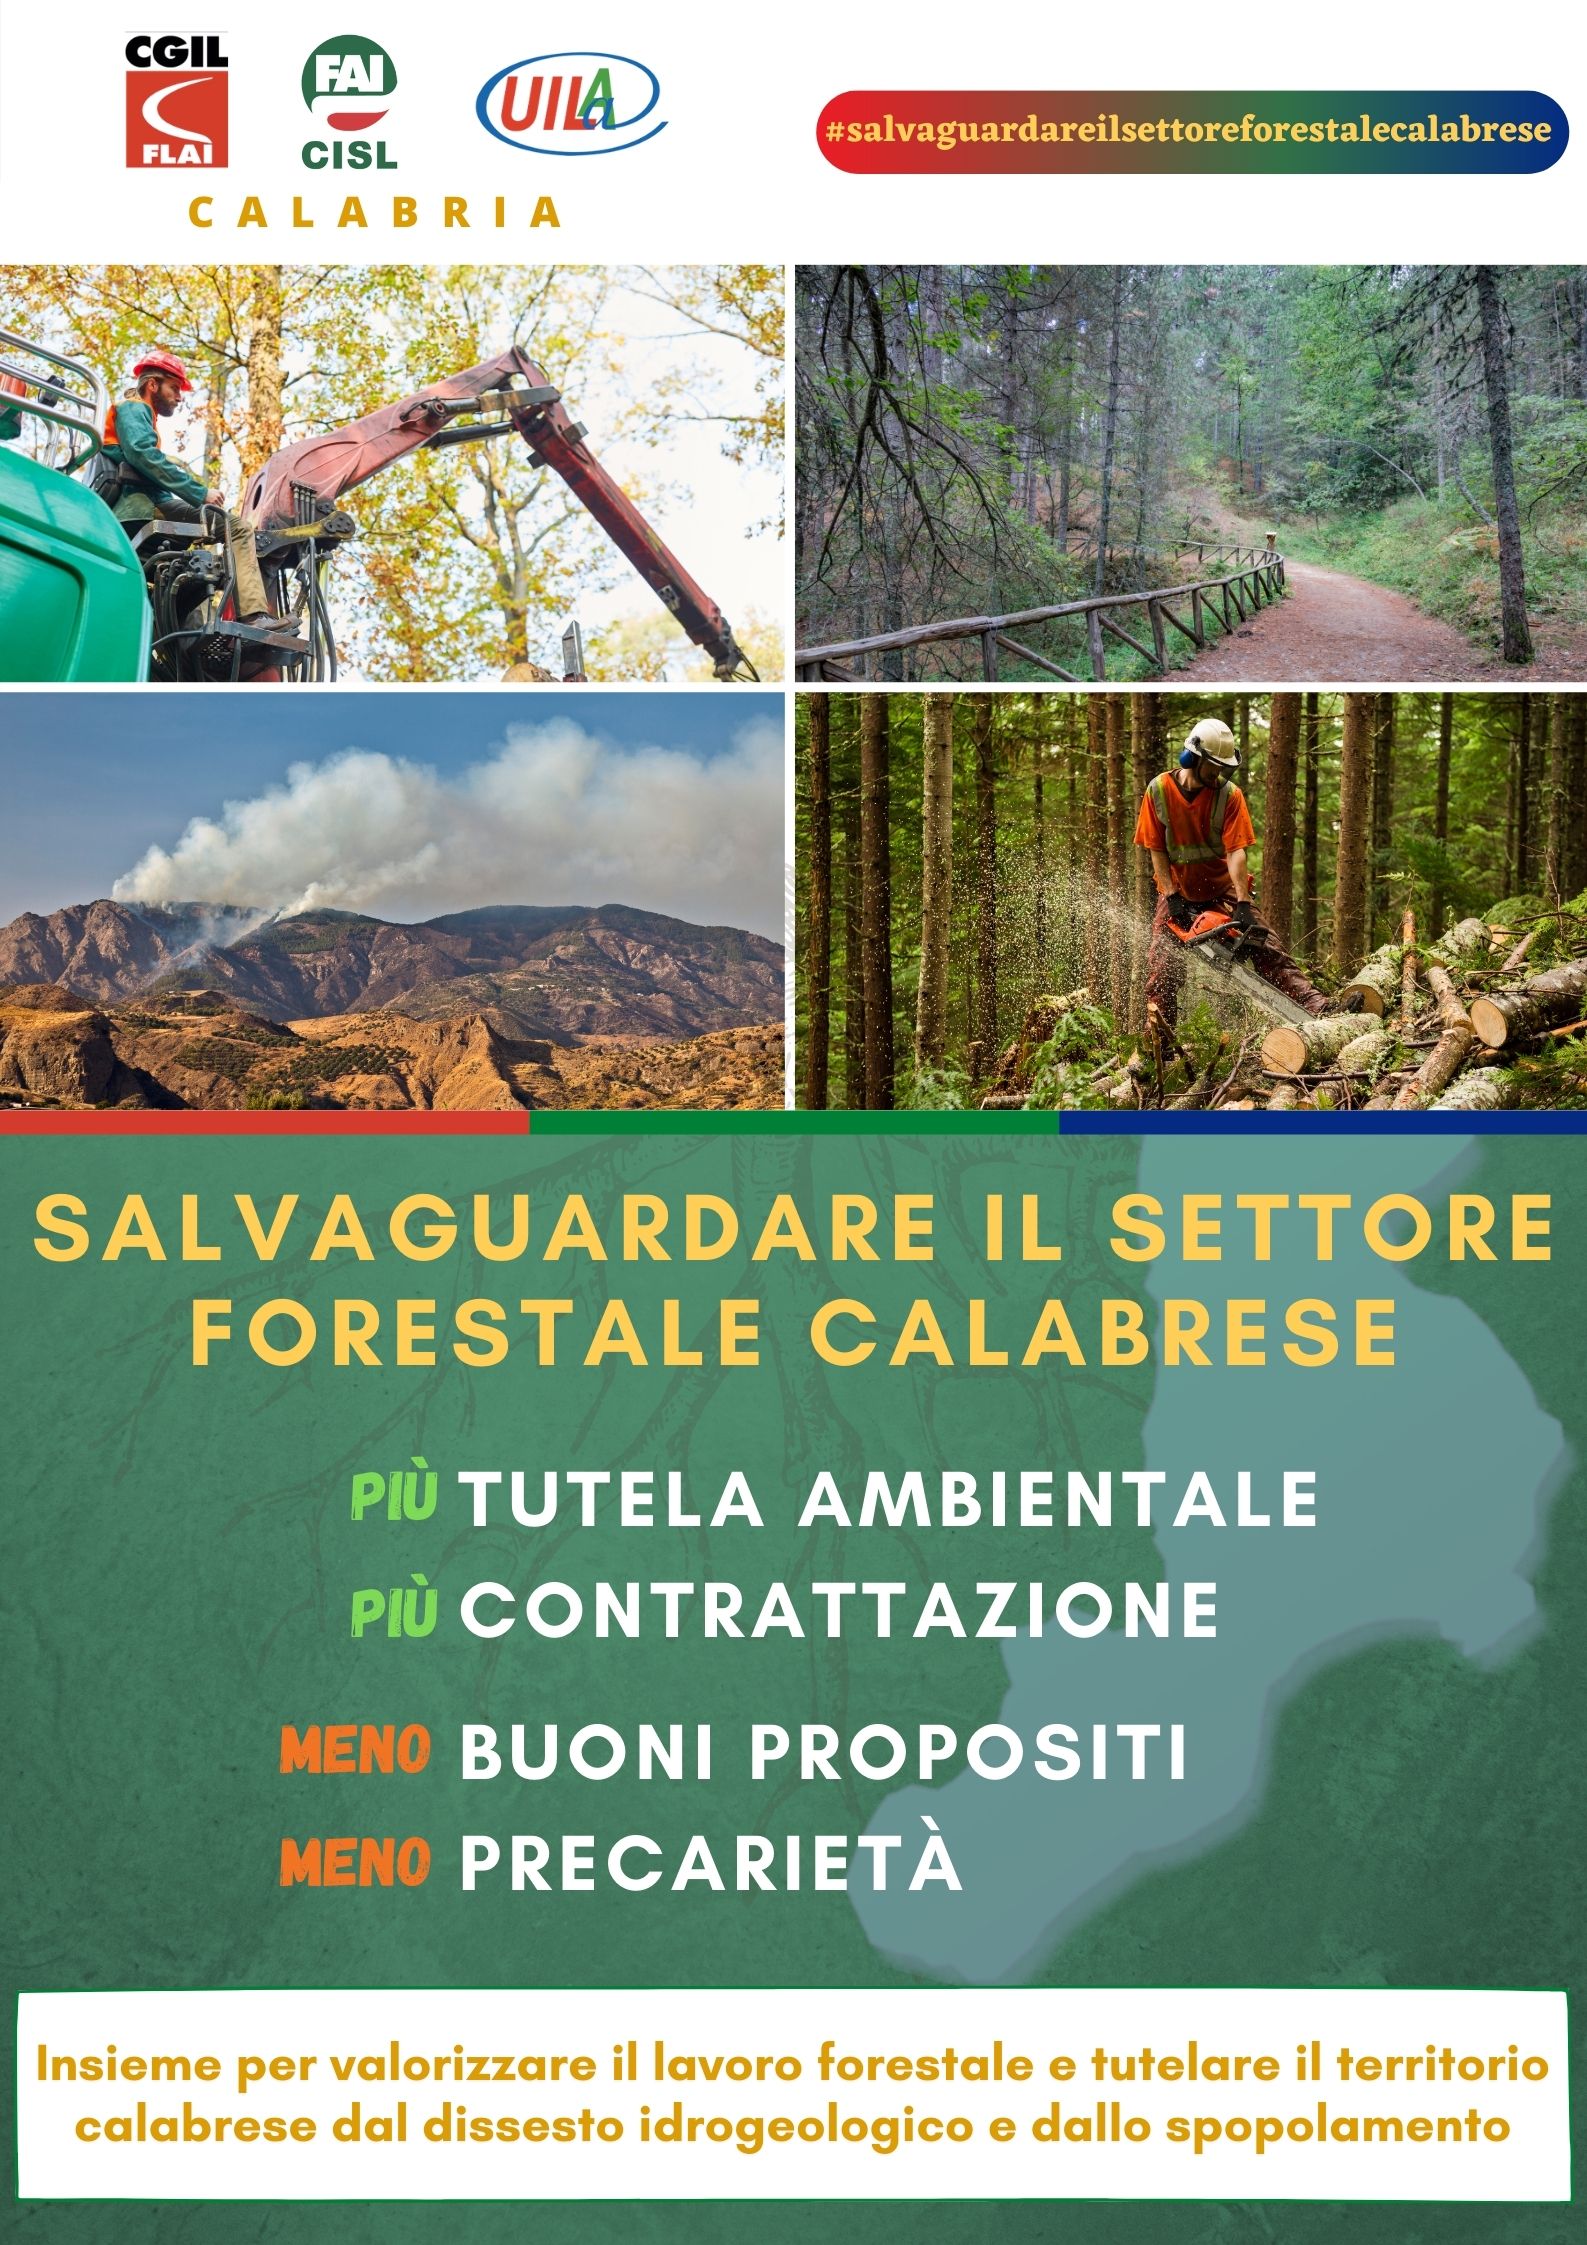 Campagna informativa FAI-FLAI-UILA Calabria - Settore forestale regionale